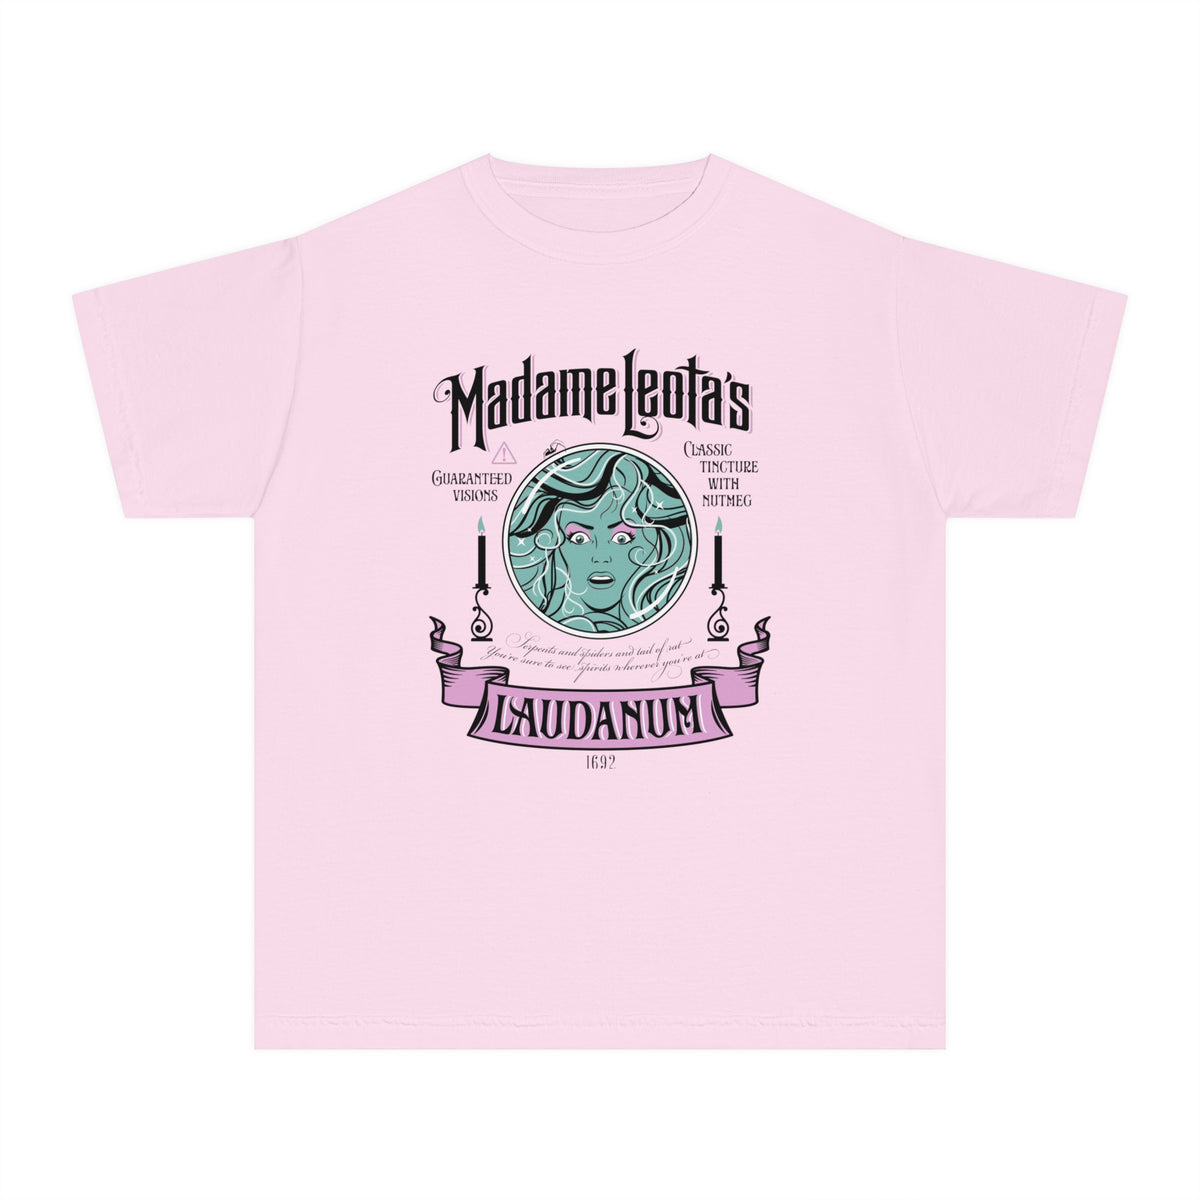 Madame Leota’s Laudanum Teal Comfort Colors Youth Midweight Tee